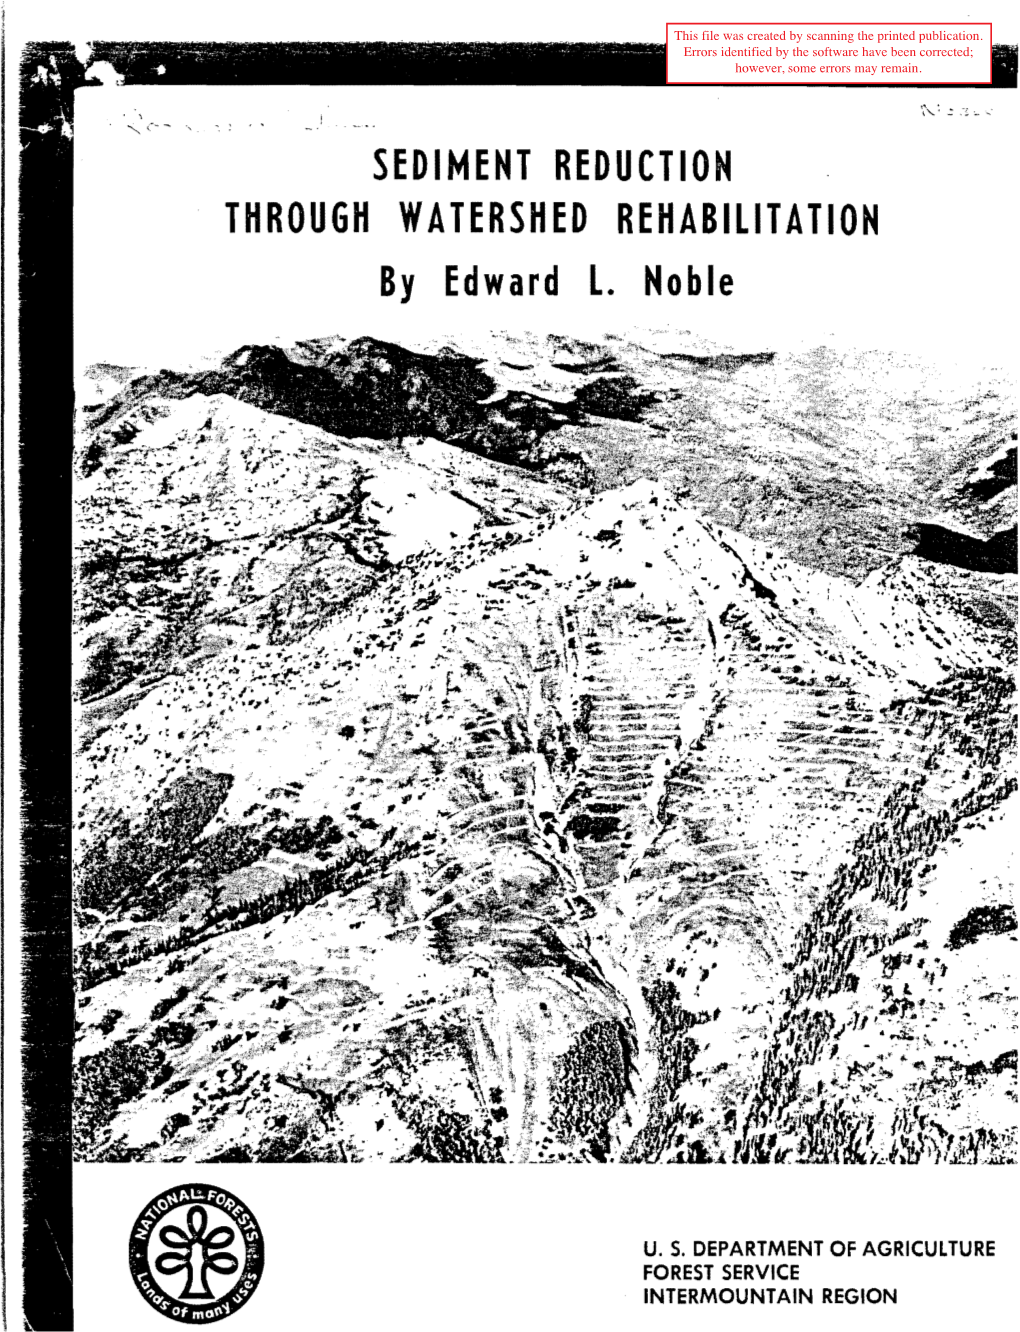 SEDIMENT REDUCTION THROUGH WATERSHED REHABILITATION by Edward L